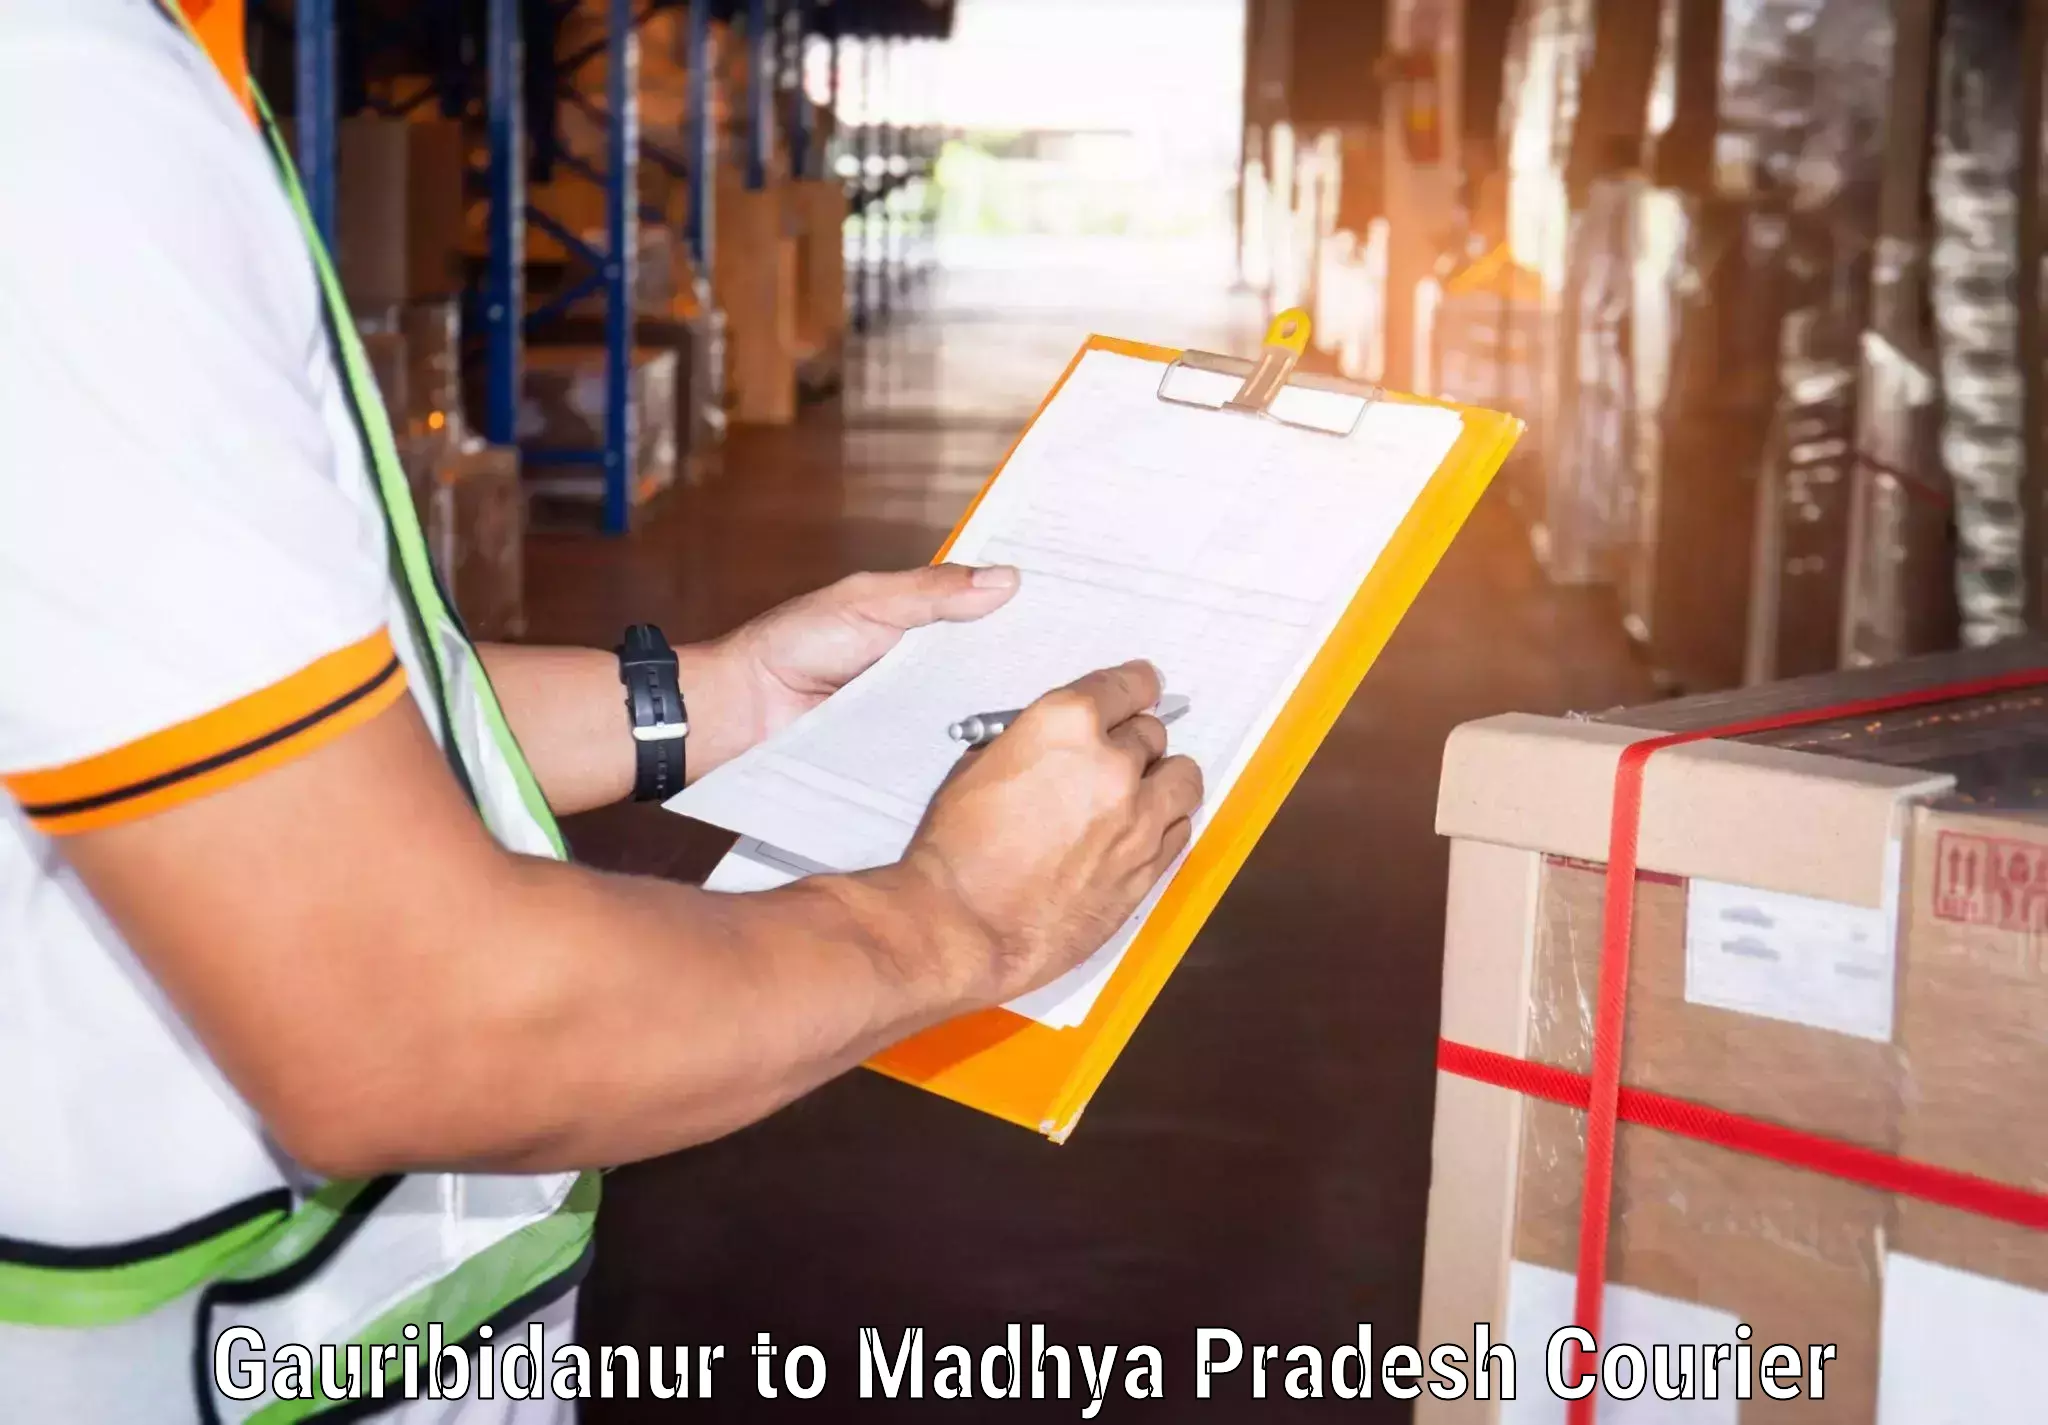 Courier service innovation Gauribidanur to Raipur Karchuliyan